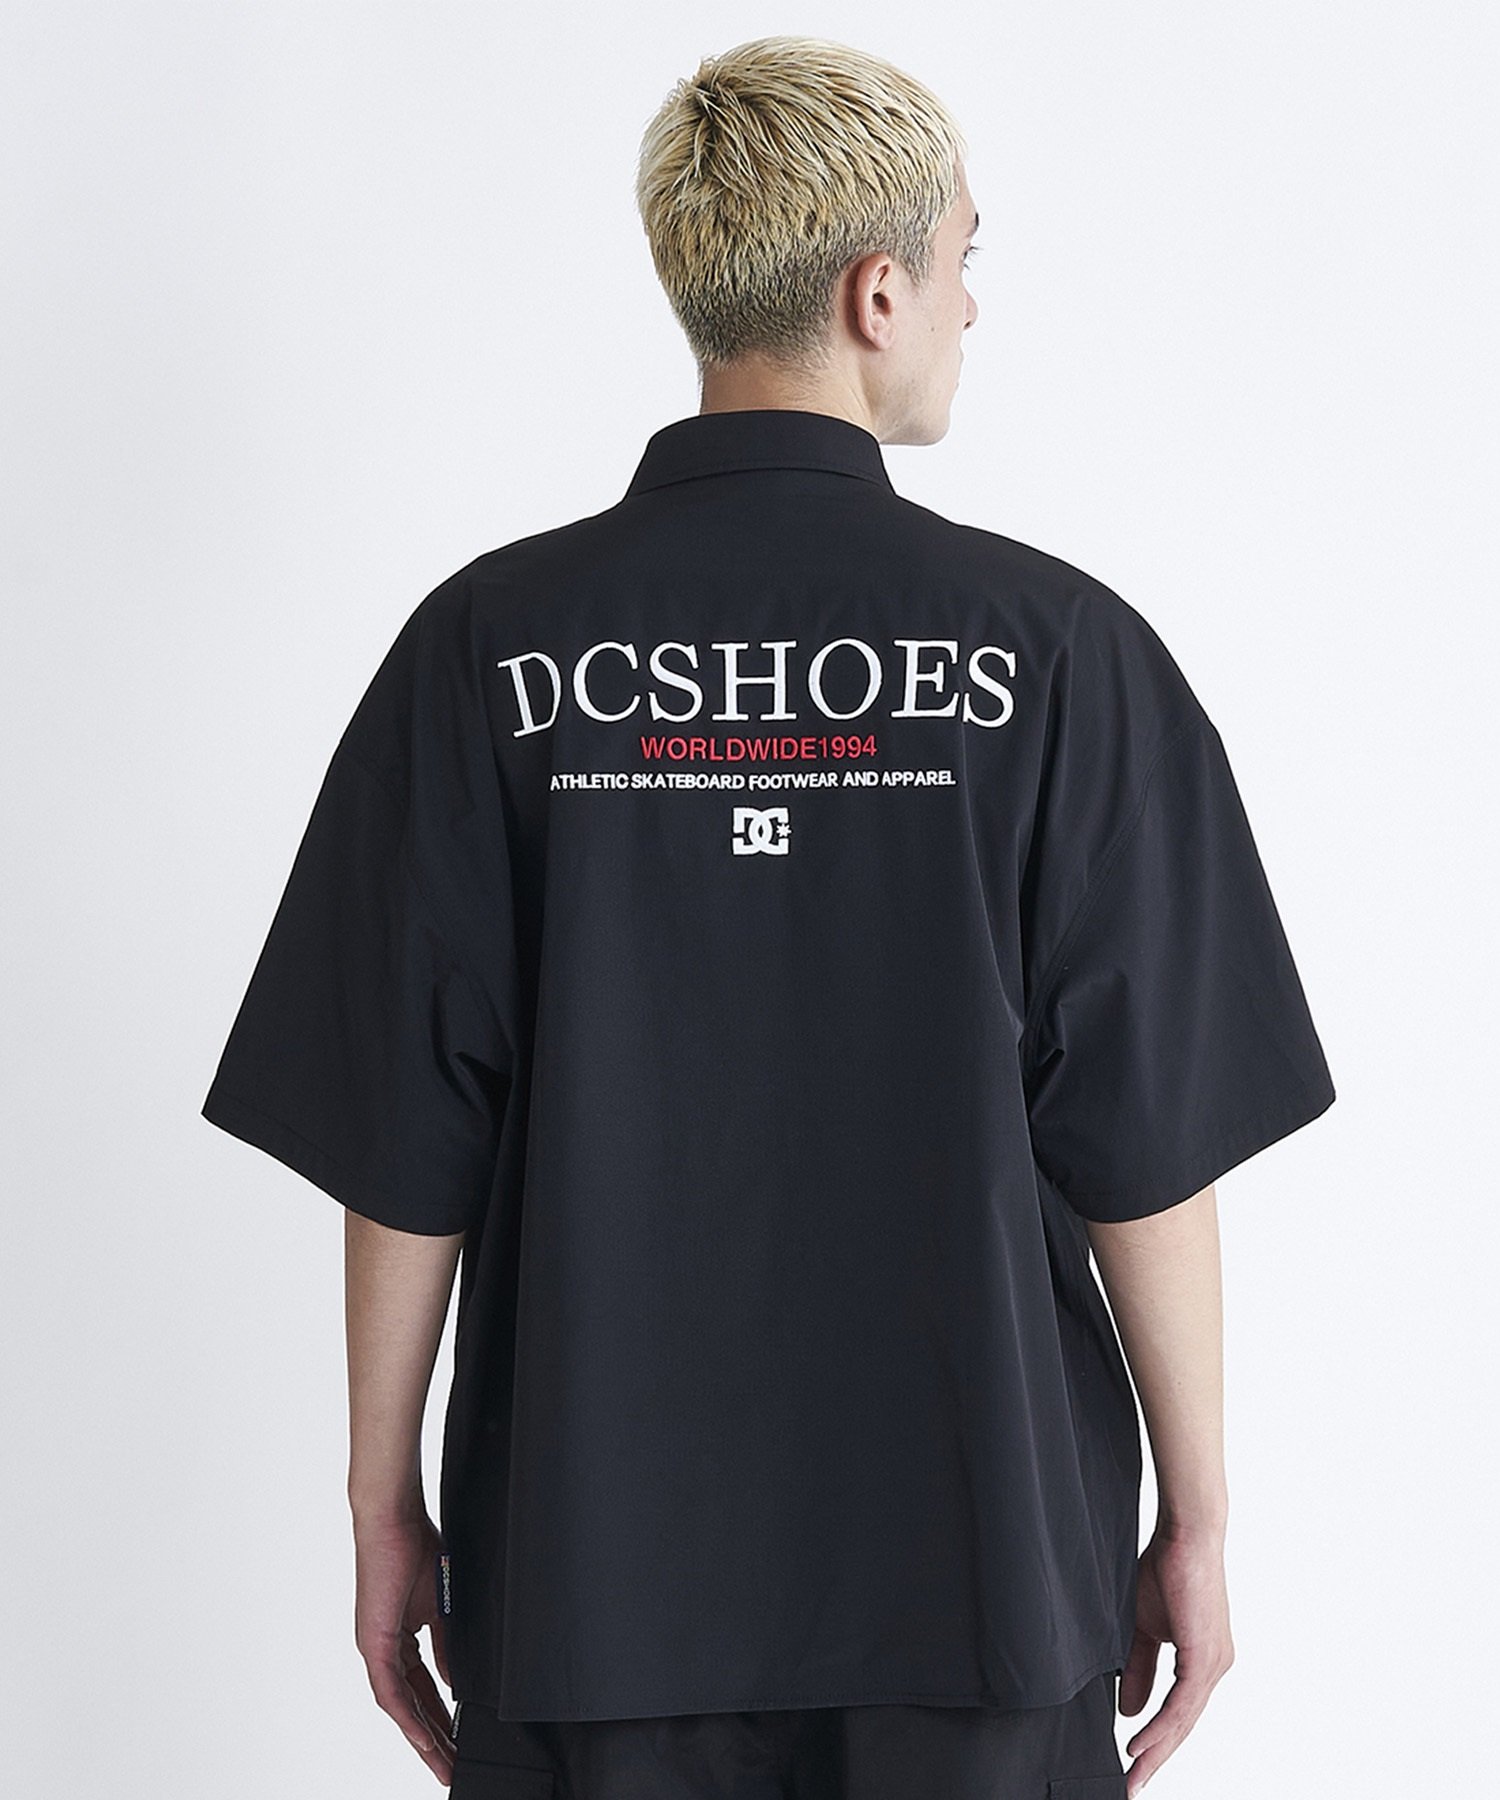 DC ディーシー メンズ 半袖シャツ バックロゴ 刺繍 ビッグシルエット セットアップ対応 DSH242001(LBL-M)